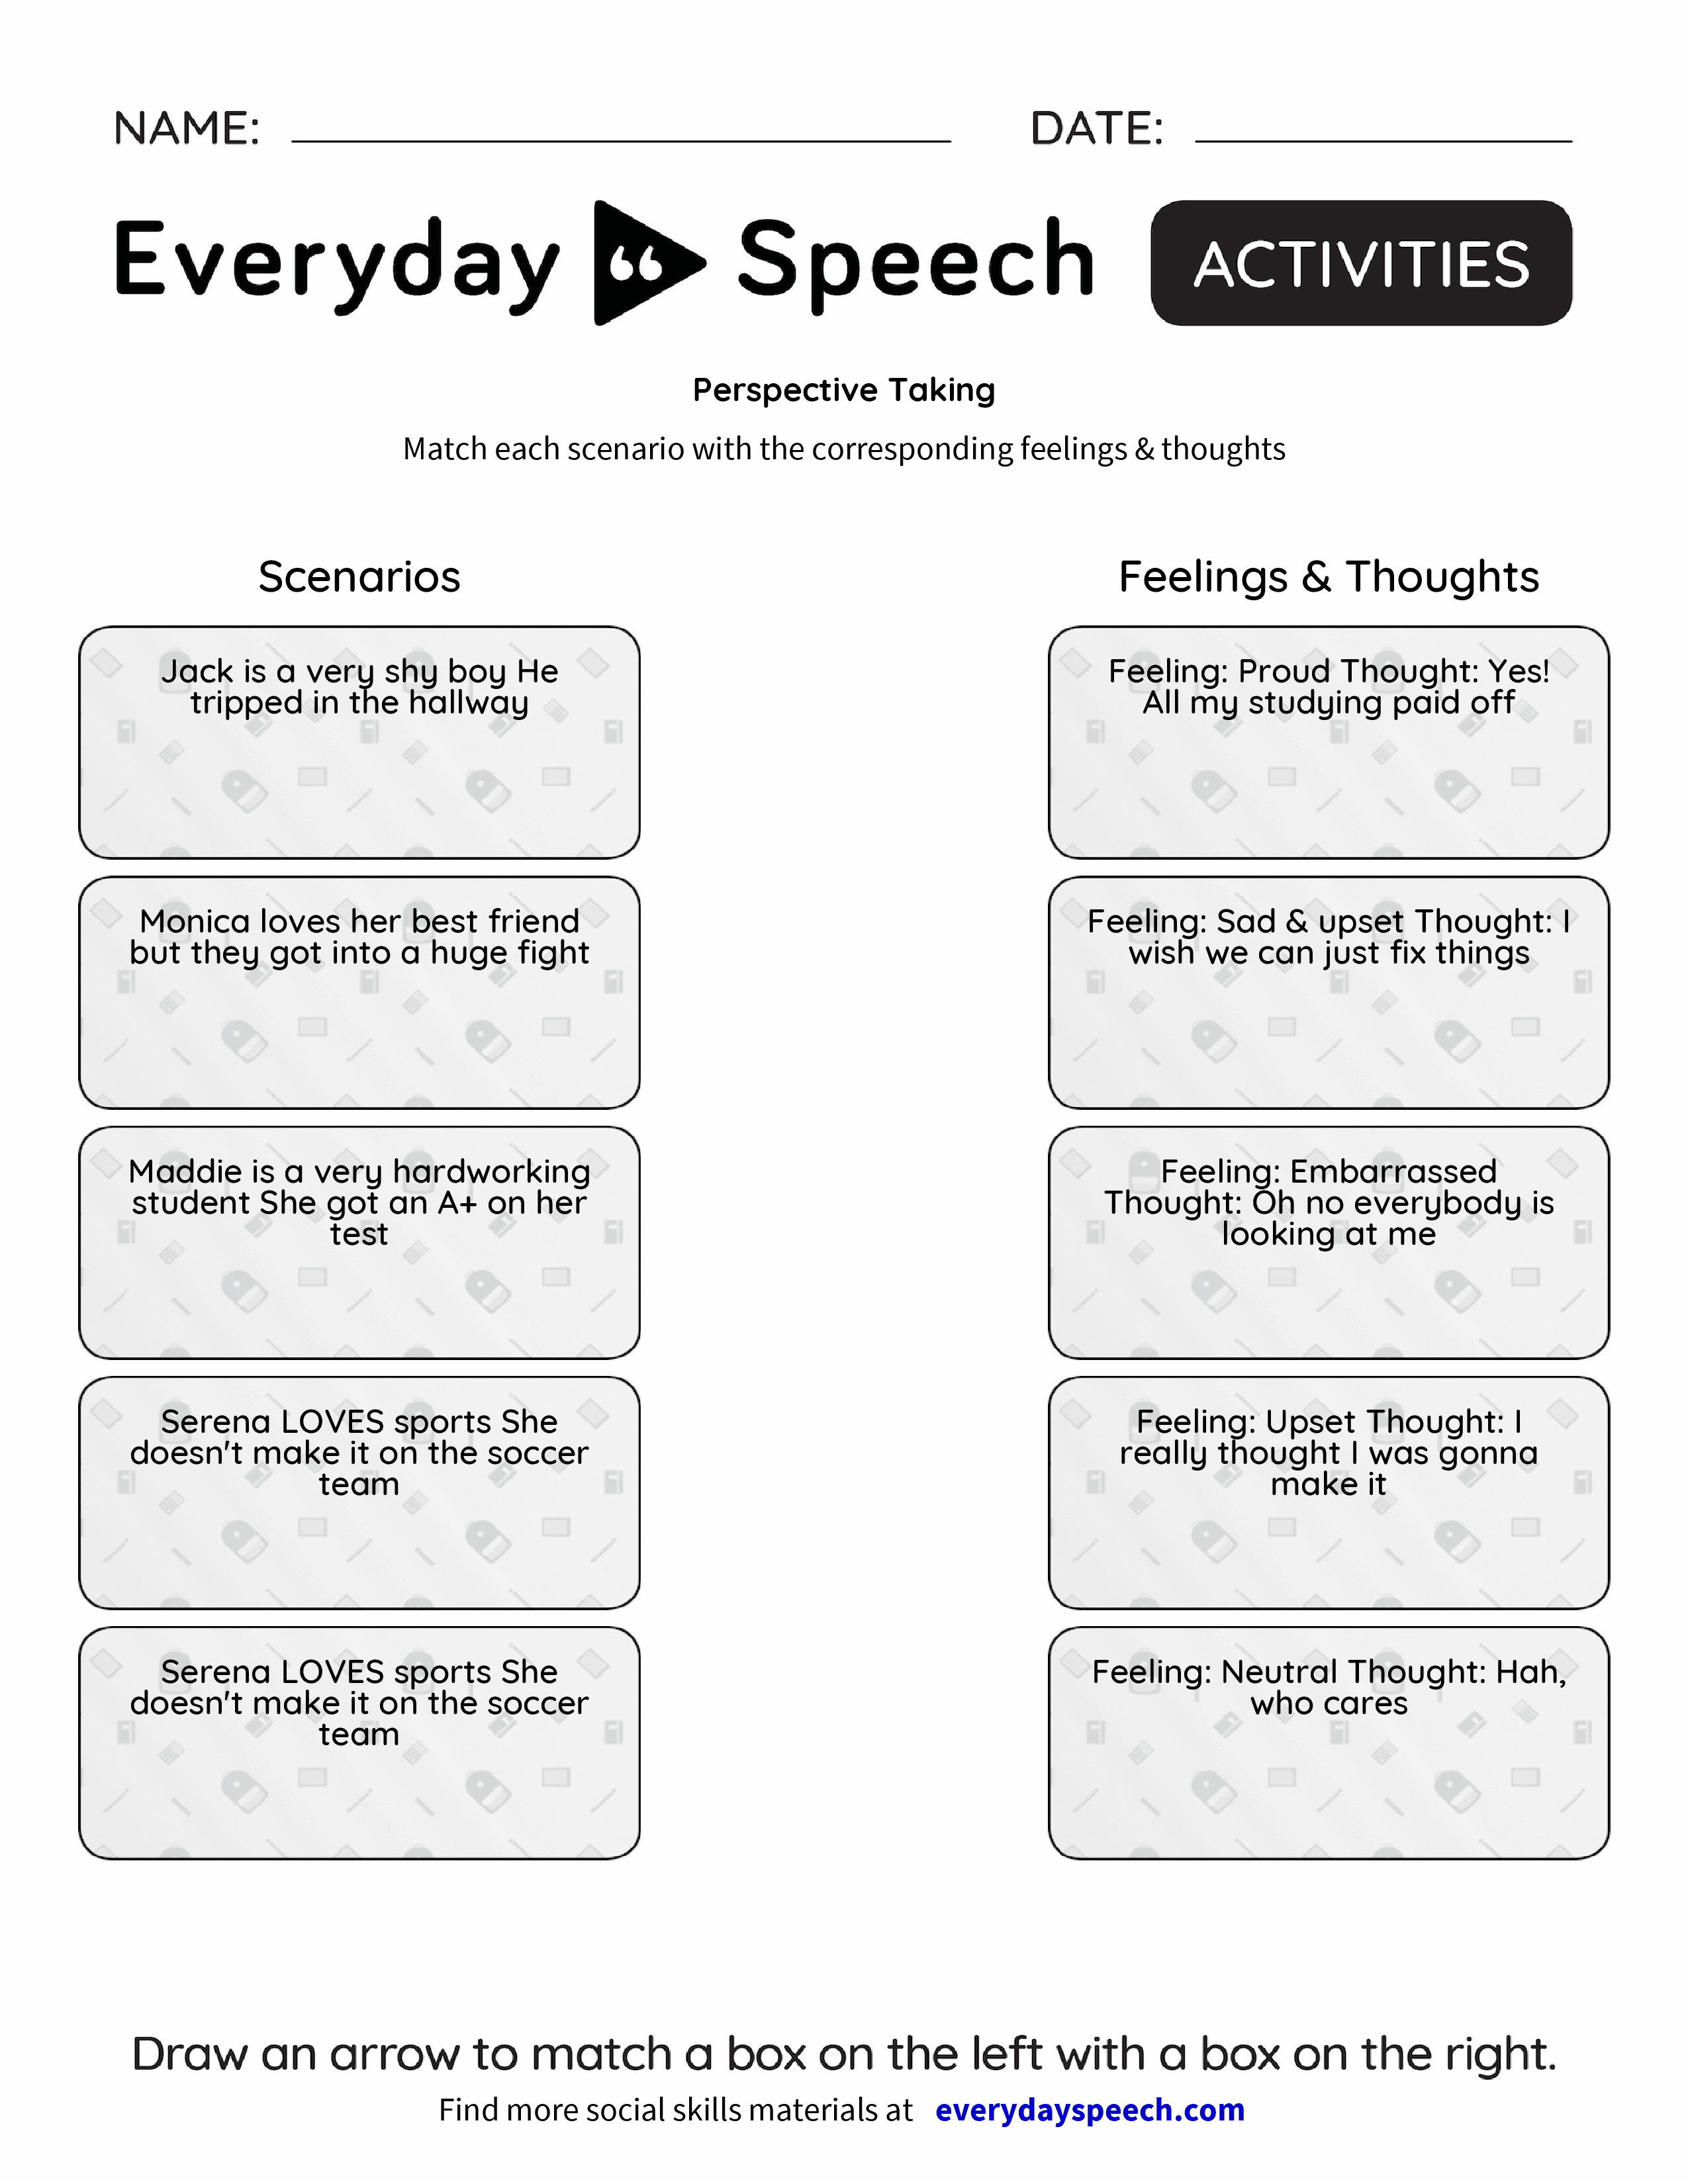 Perspective Taking - Everyday Speech - Everyday Speech